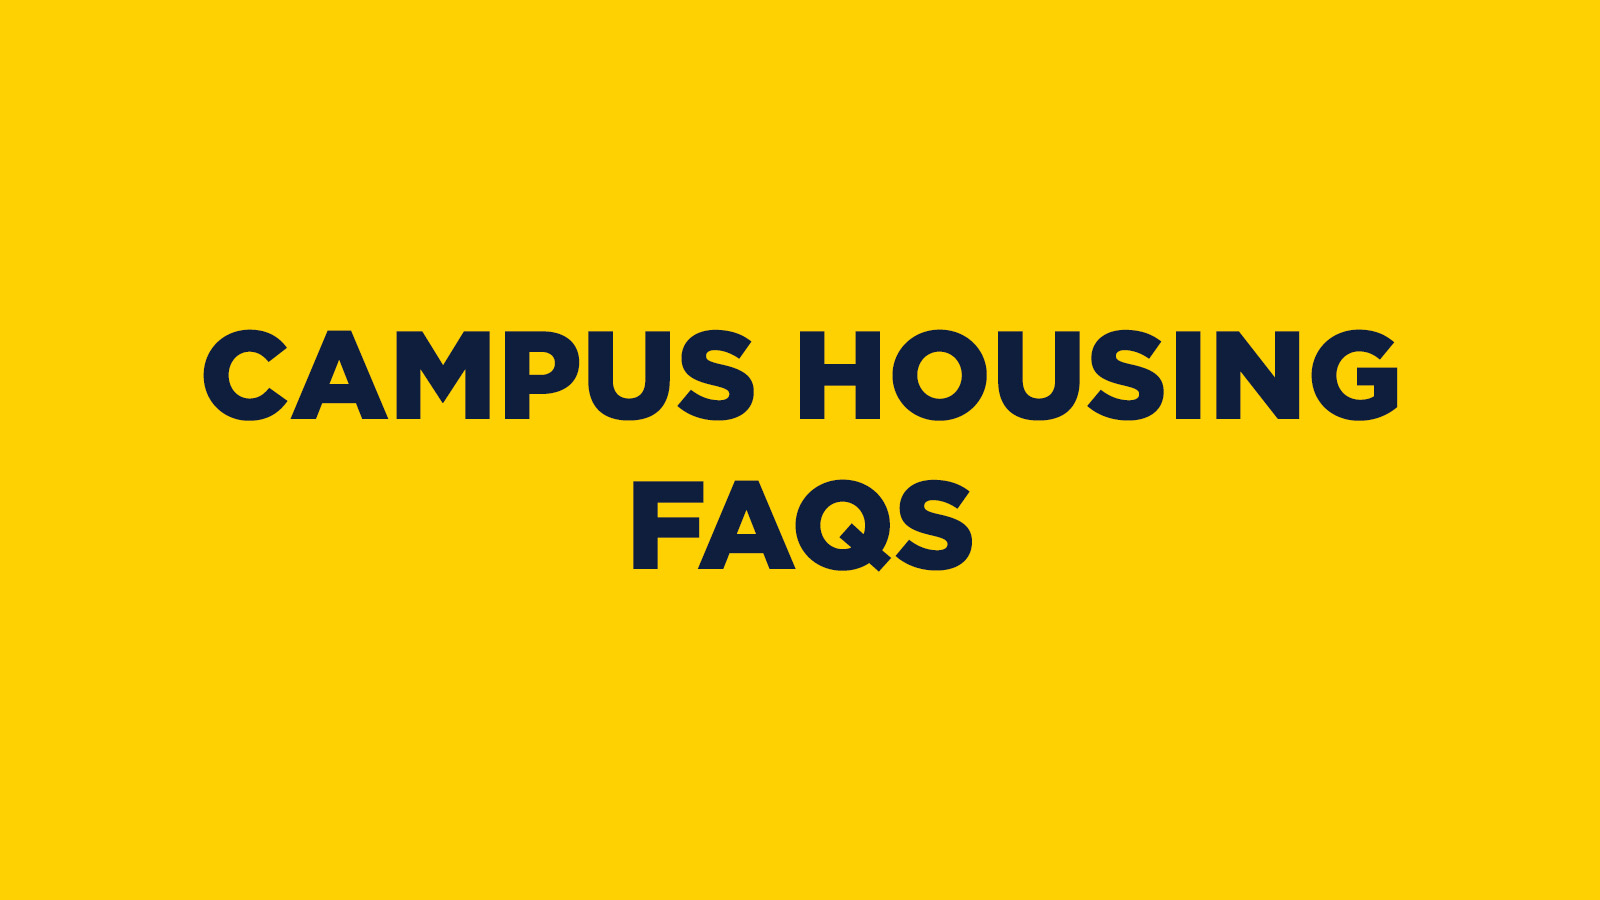 CAMPUS HOUSING FAQS